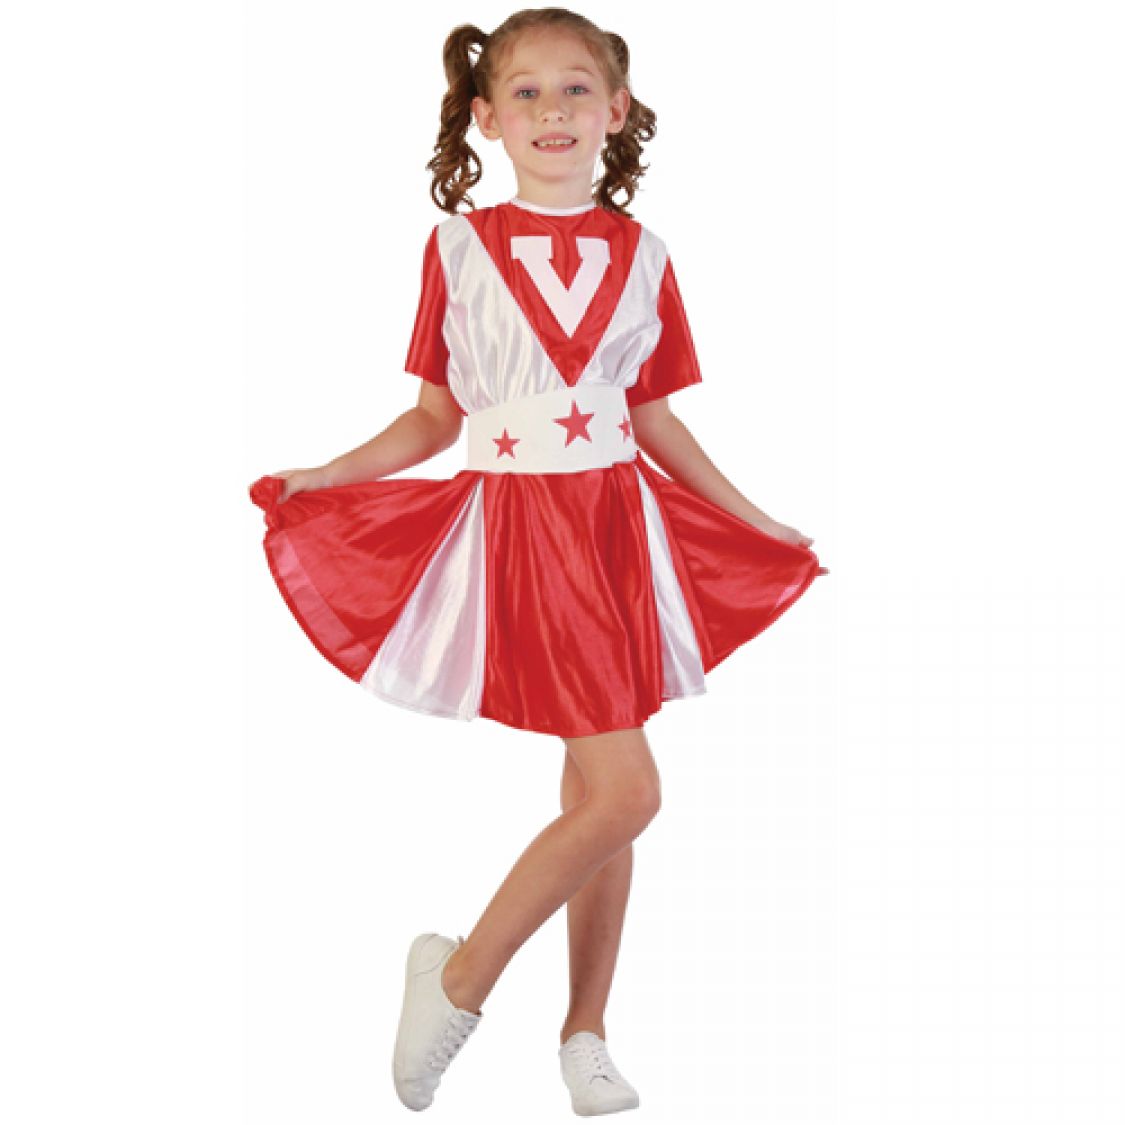 Déguisement Enfant Pom Pom Girl rouge et blanc